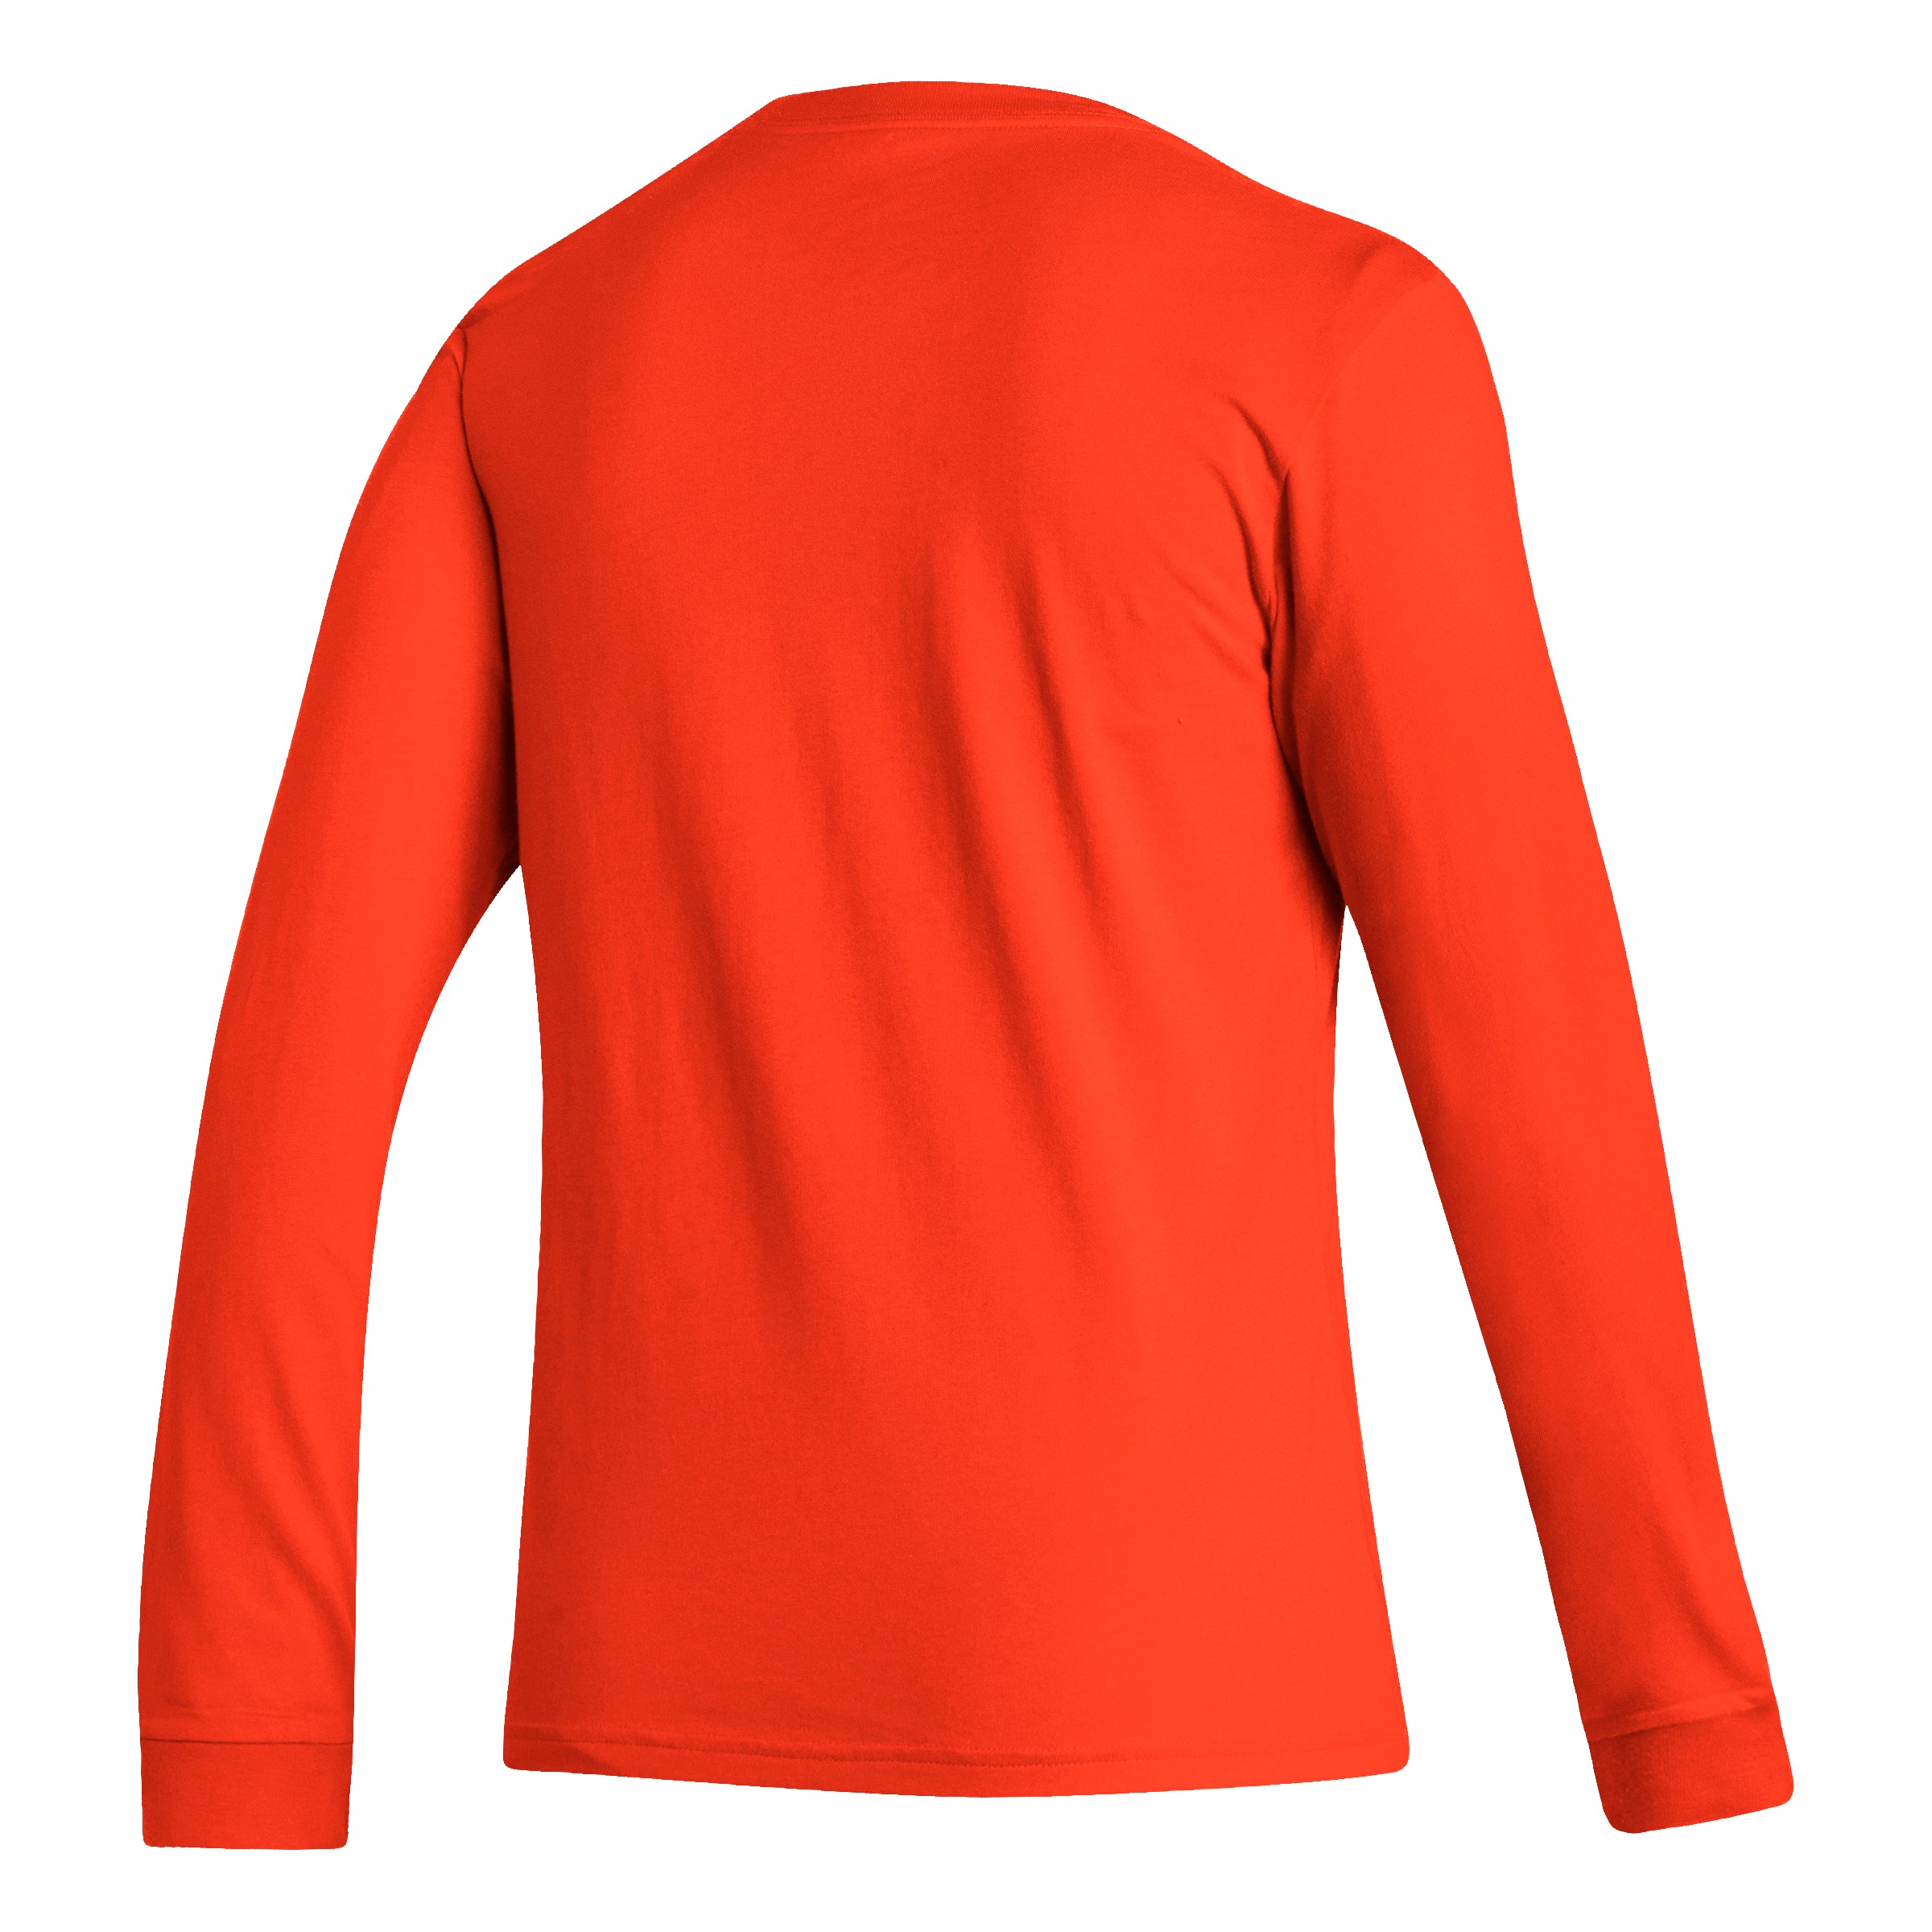 Miami Hurricanes Women's adidas Locker Logo L/S Fresh T-Shirt - Orange